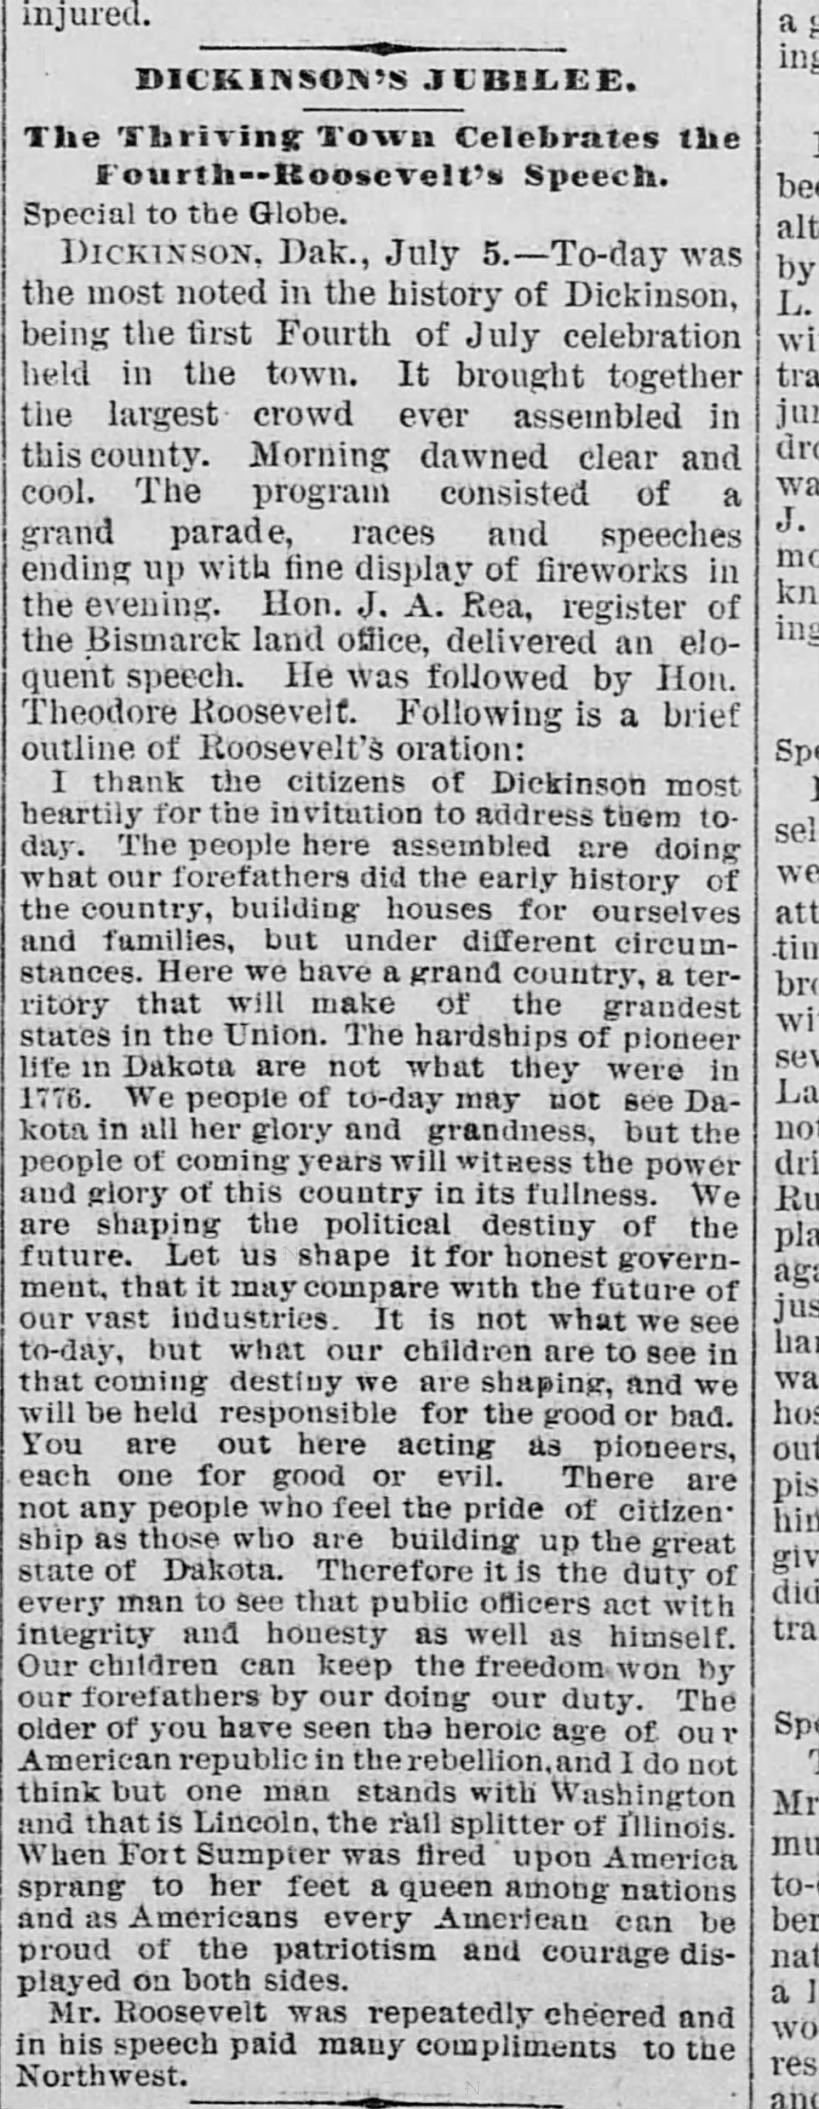 6 July 1886 Theo Roosevelt speaker at Dickinson, Dakota Fourth of July Jubilee